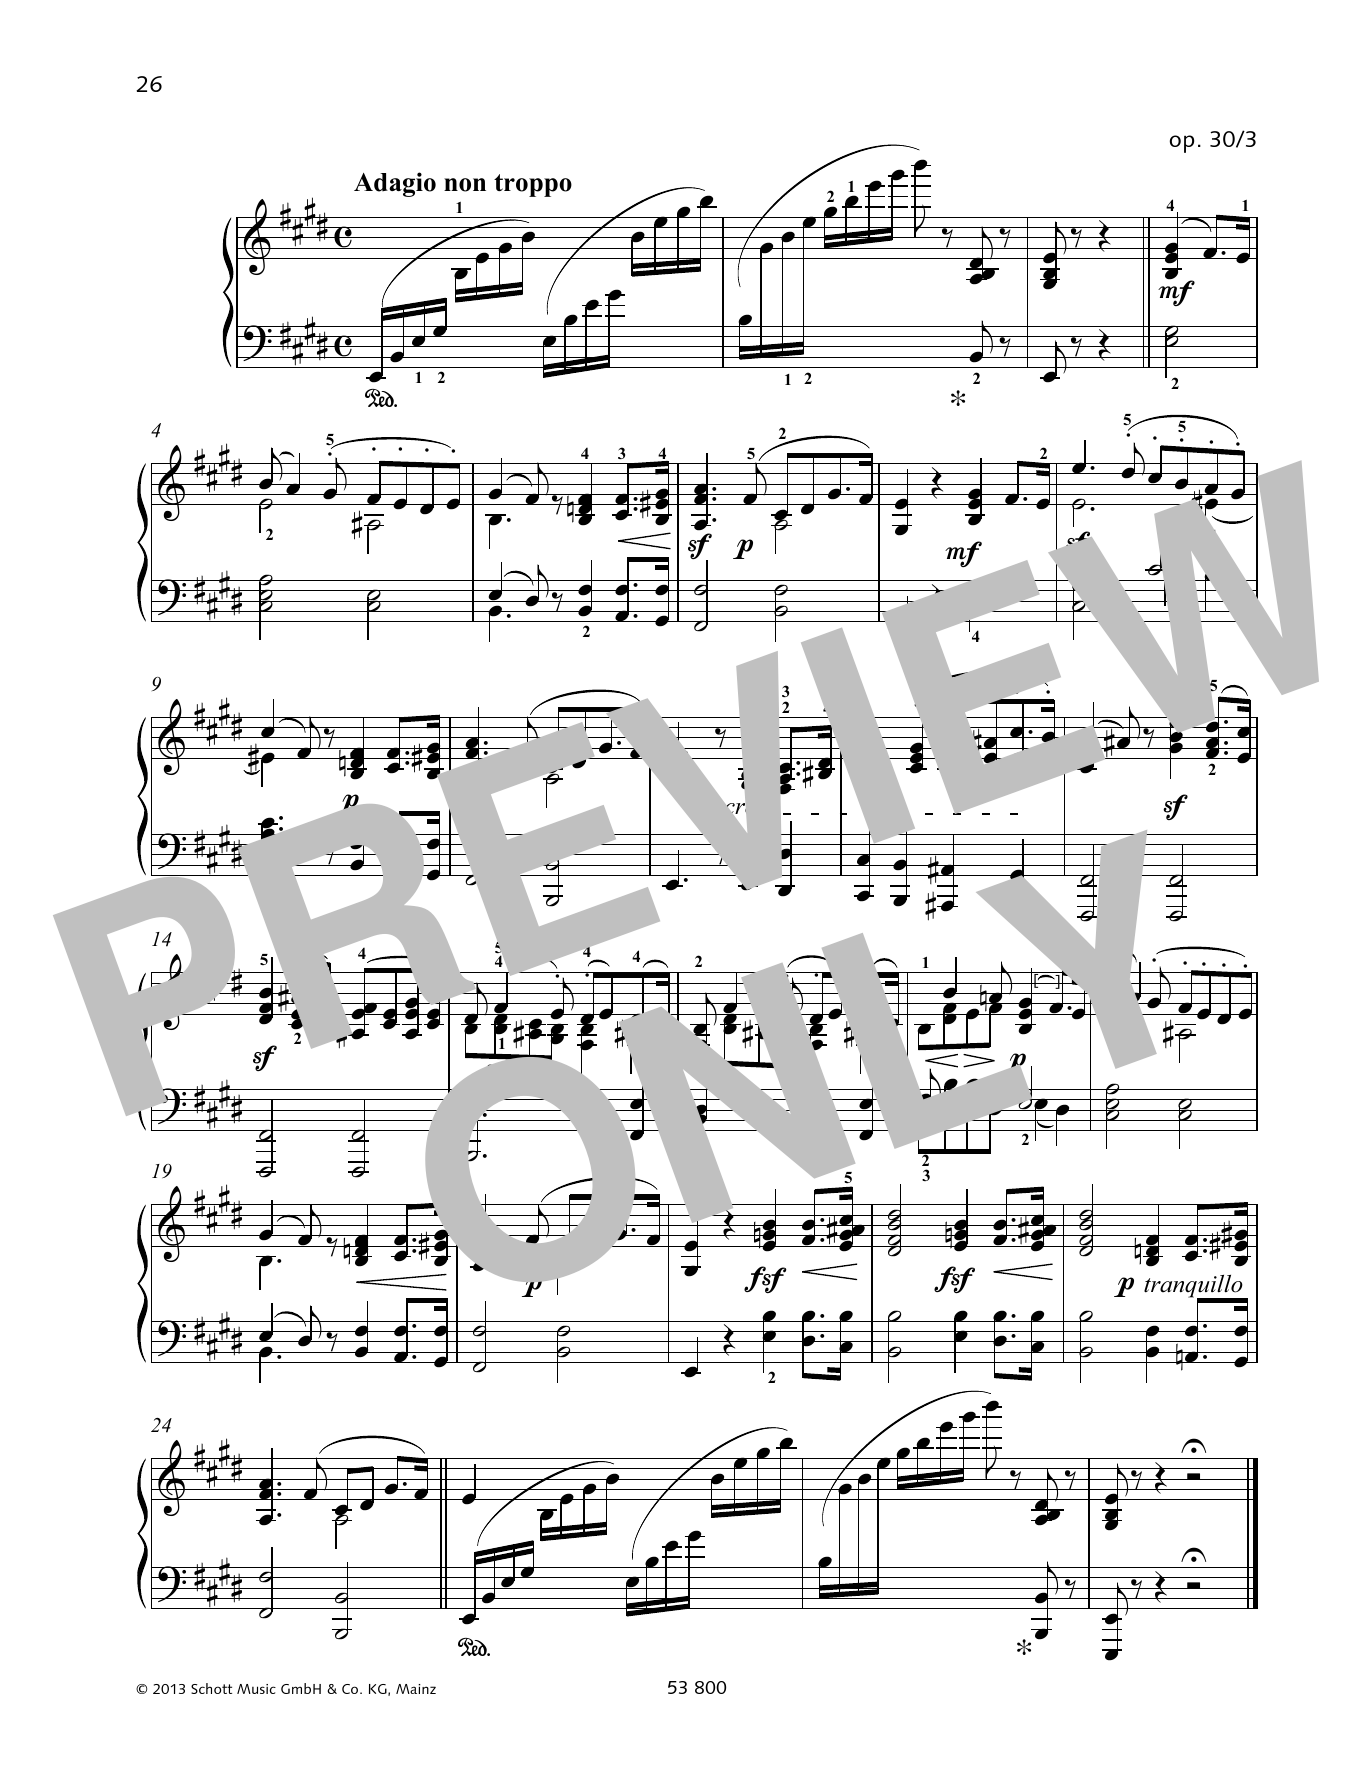 Felix Mendelssohn Bartholdy Adagio non troppo Sheet Music Notes & Chords for Piano Solo - Download or Print PDF